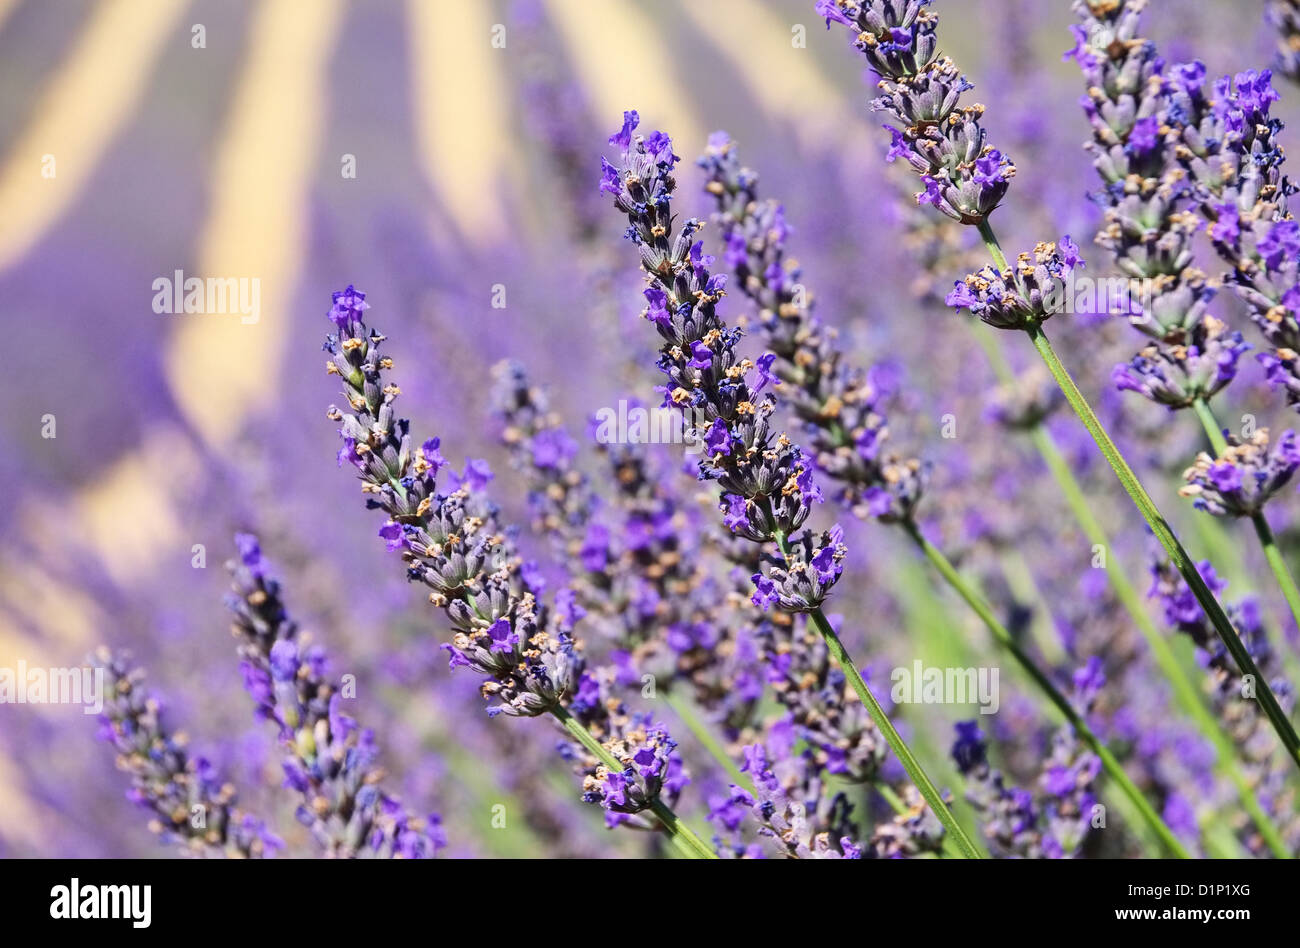 Lavendelfeld - lavender field 17 Stock Photo